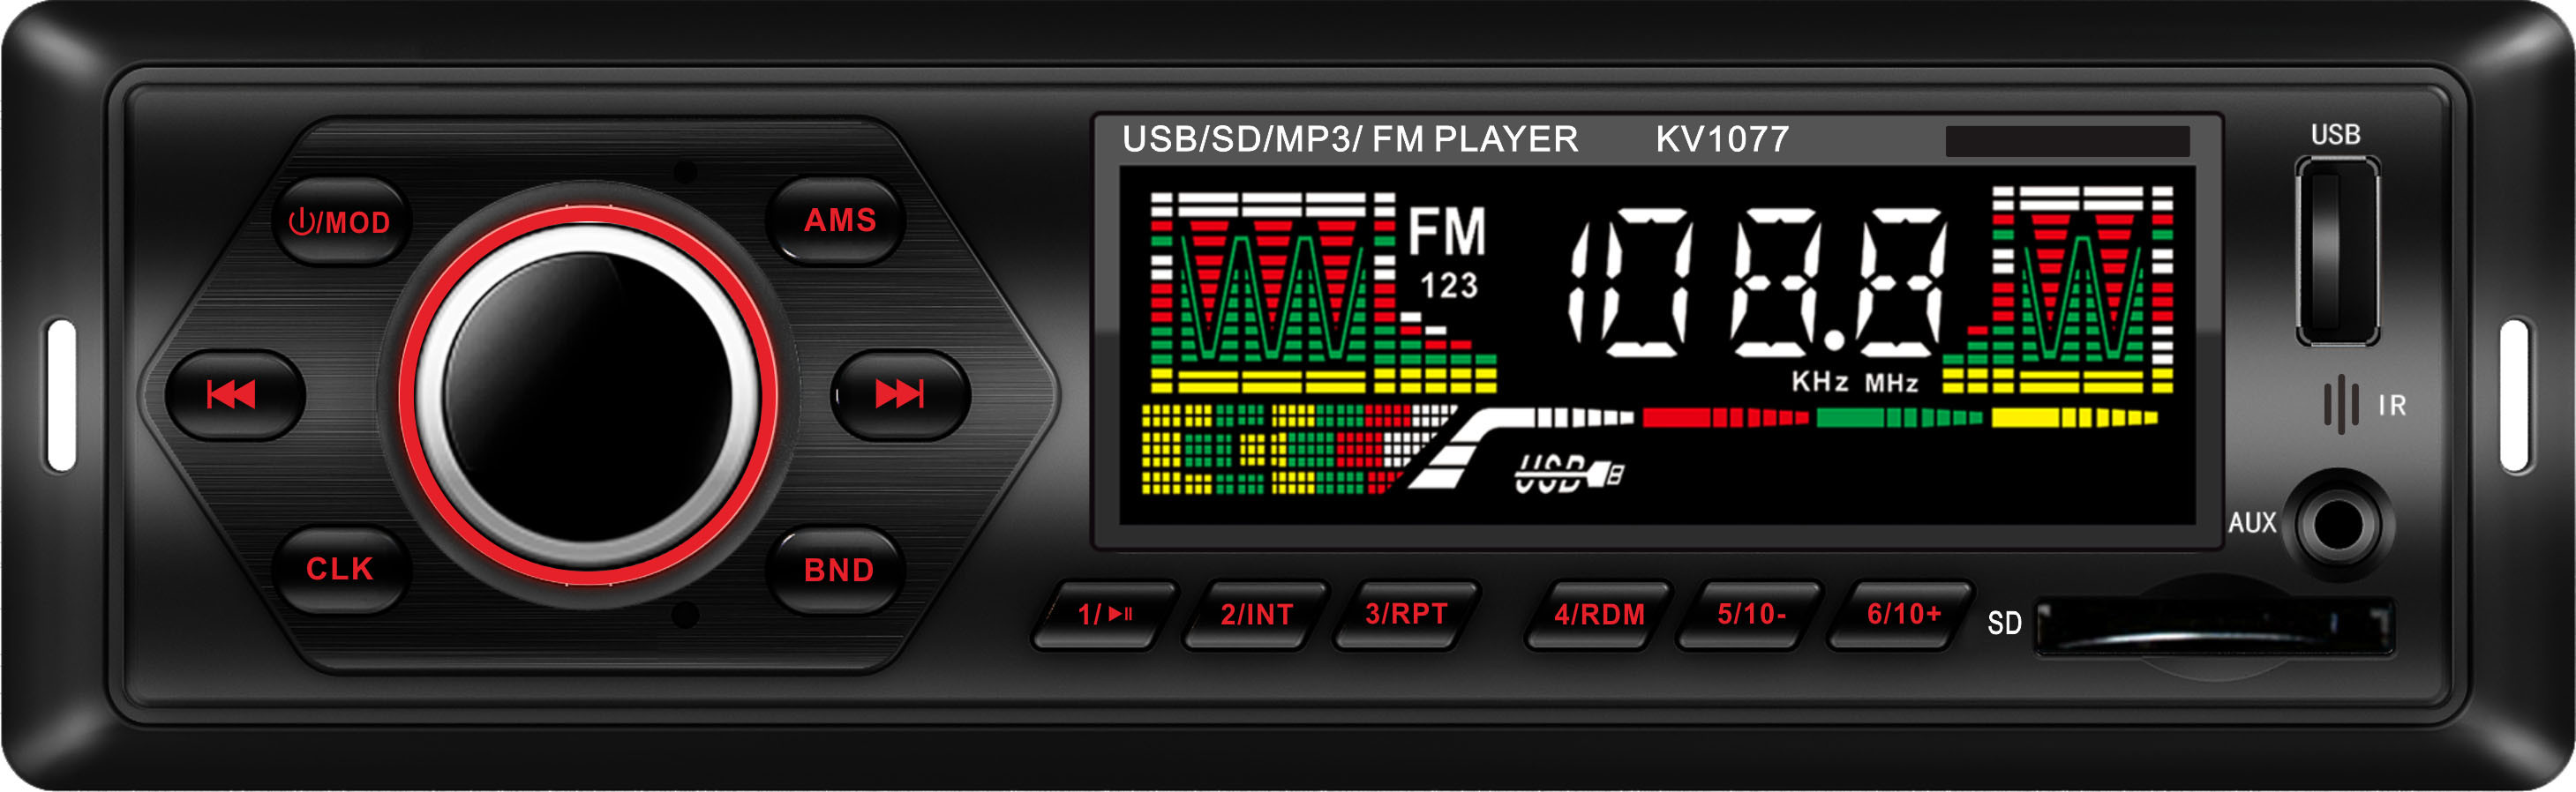 Fixed Panel Car MP3 Player Ts-1077f